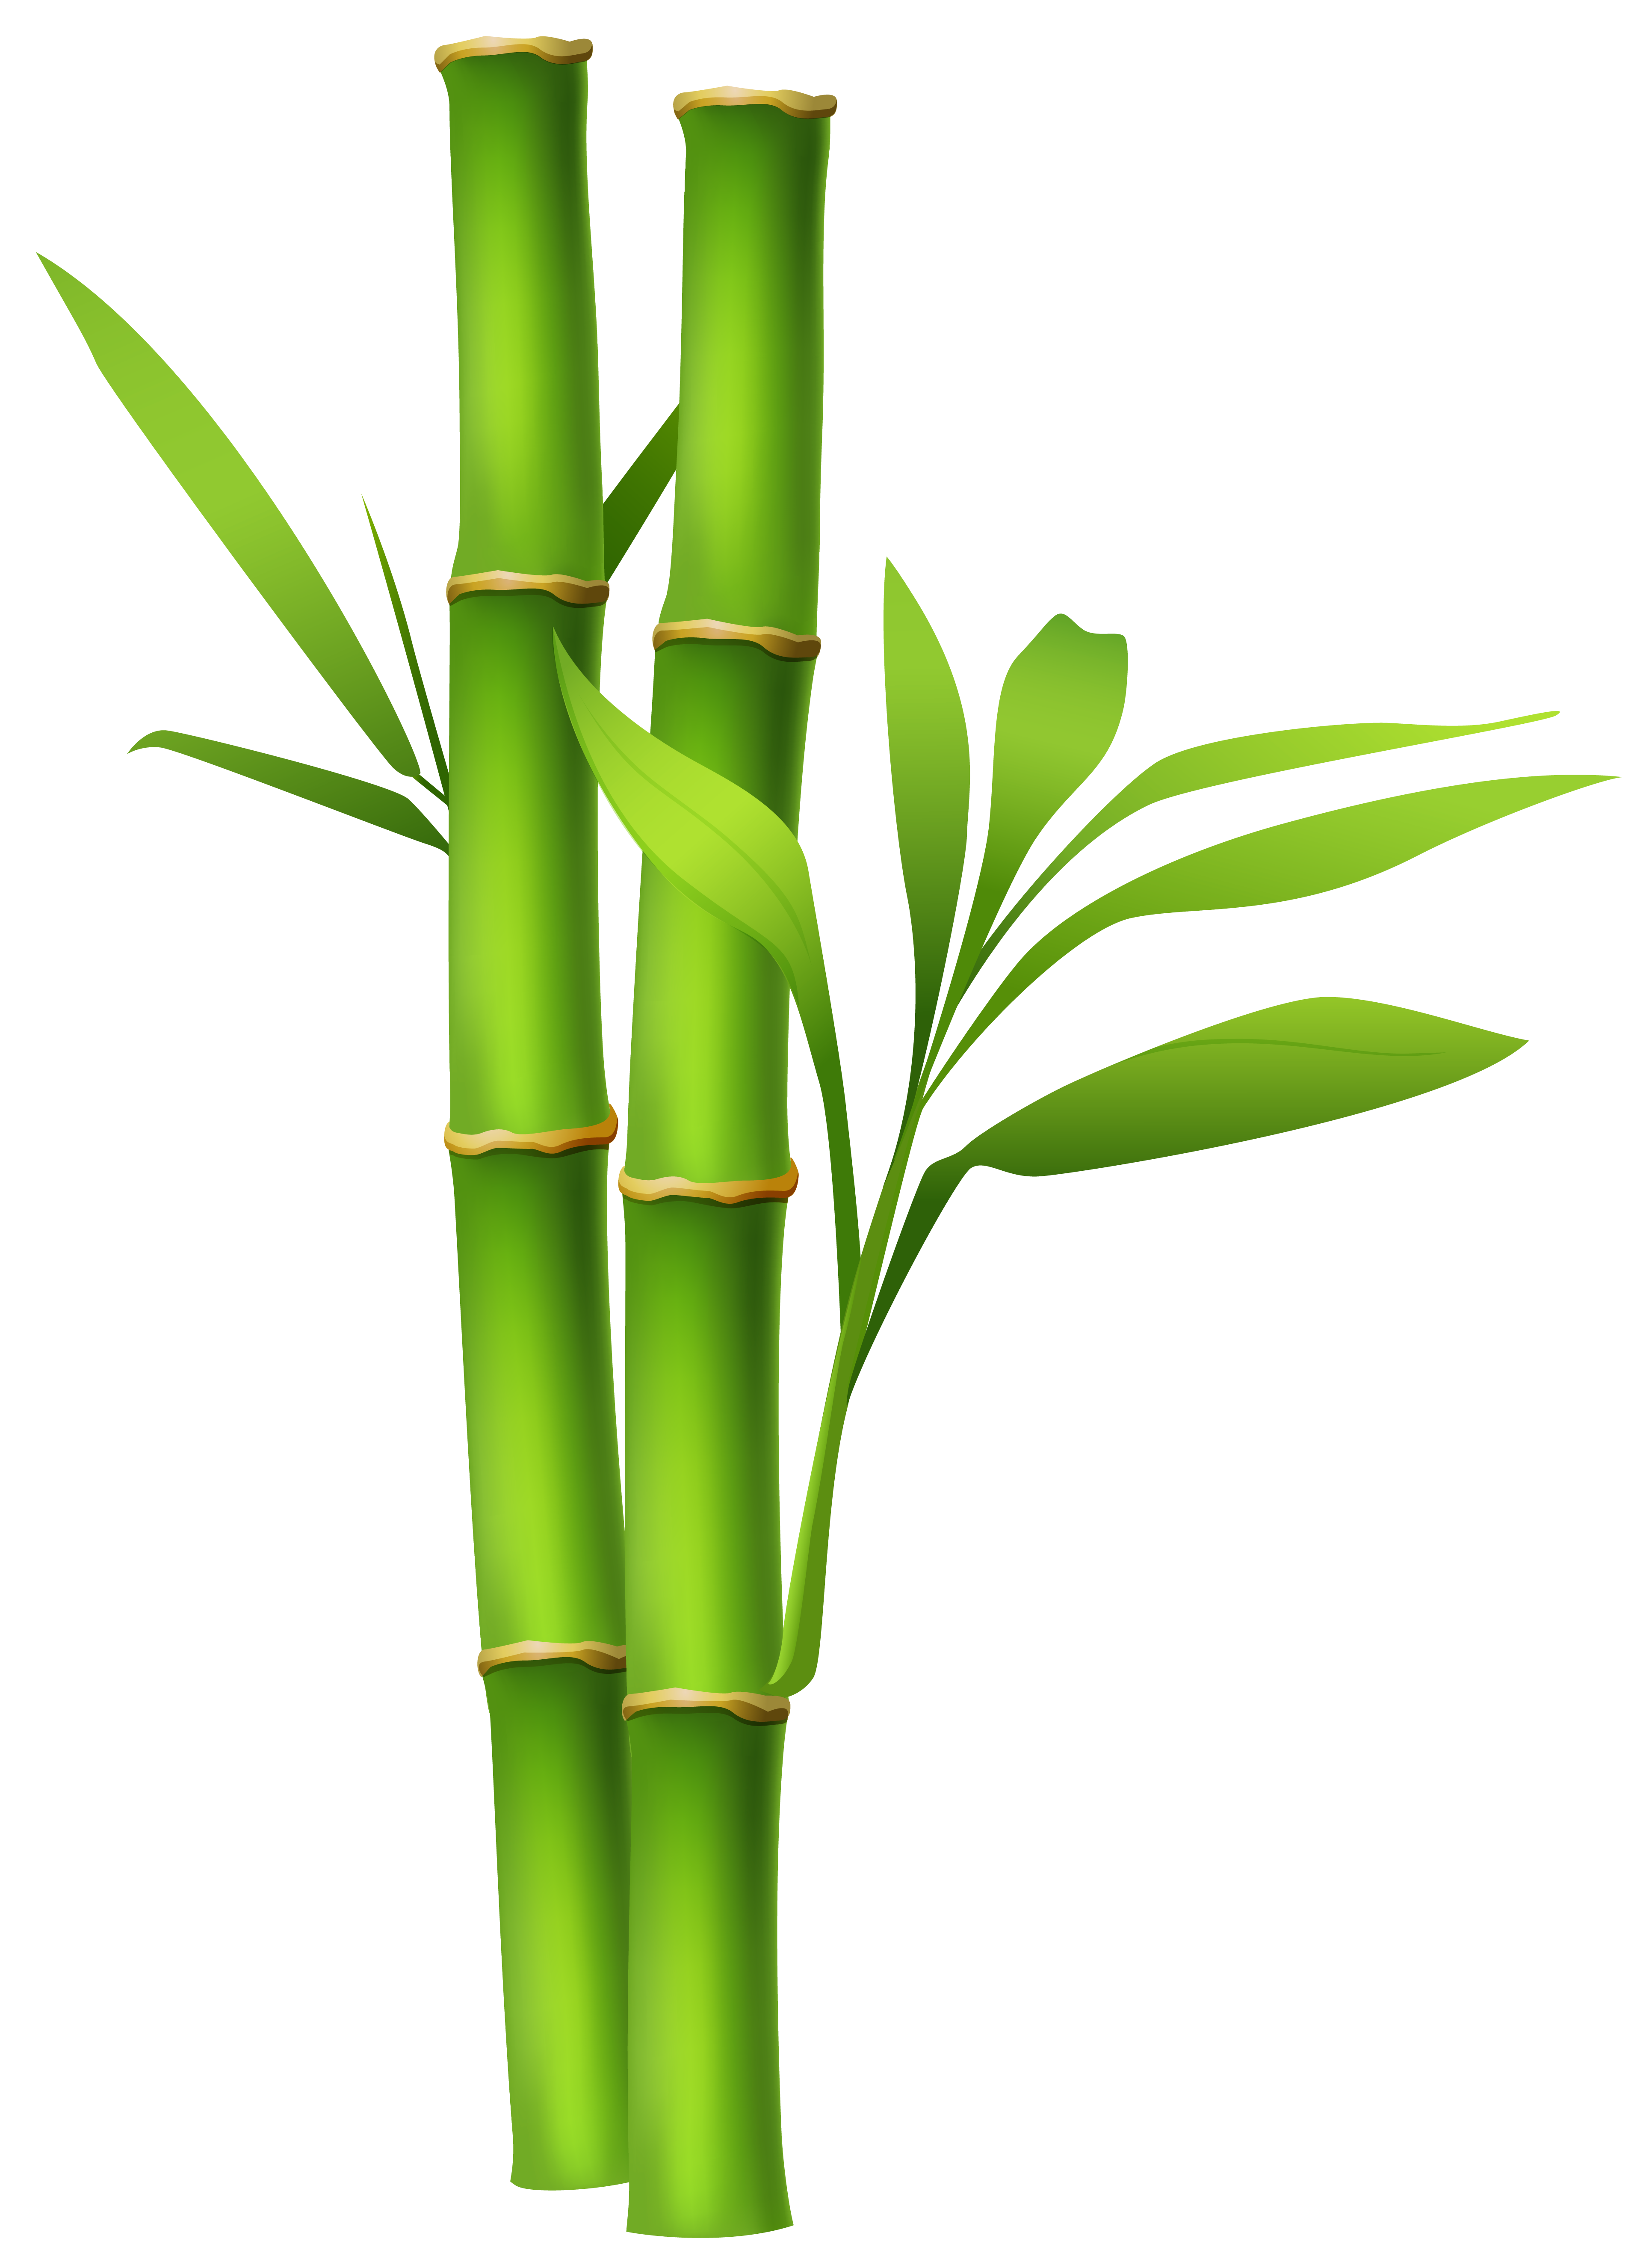 ... Bamboo Clipart - cliparta - Bamboo Clip Art